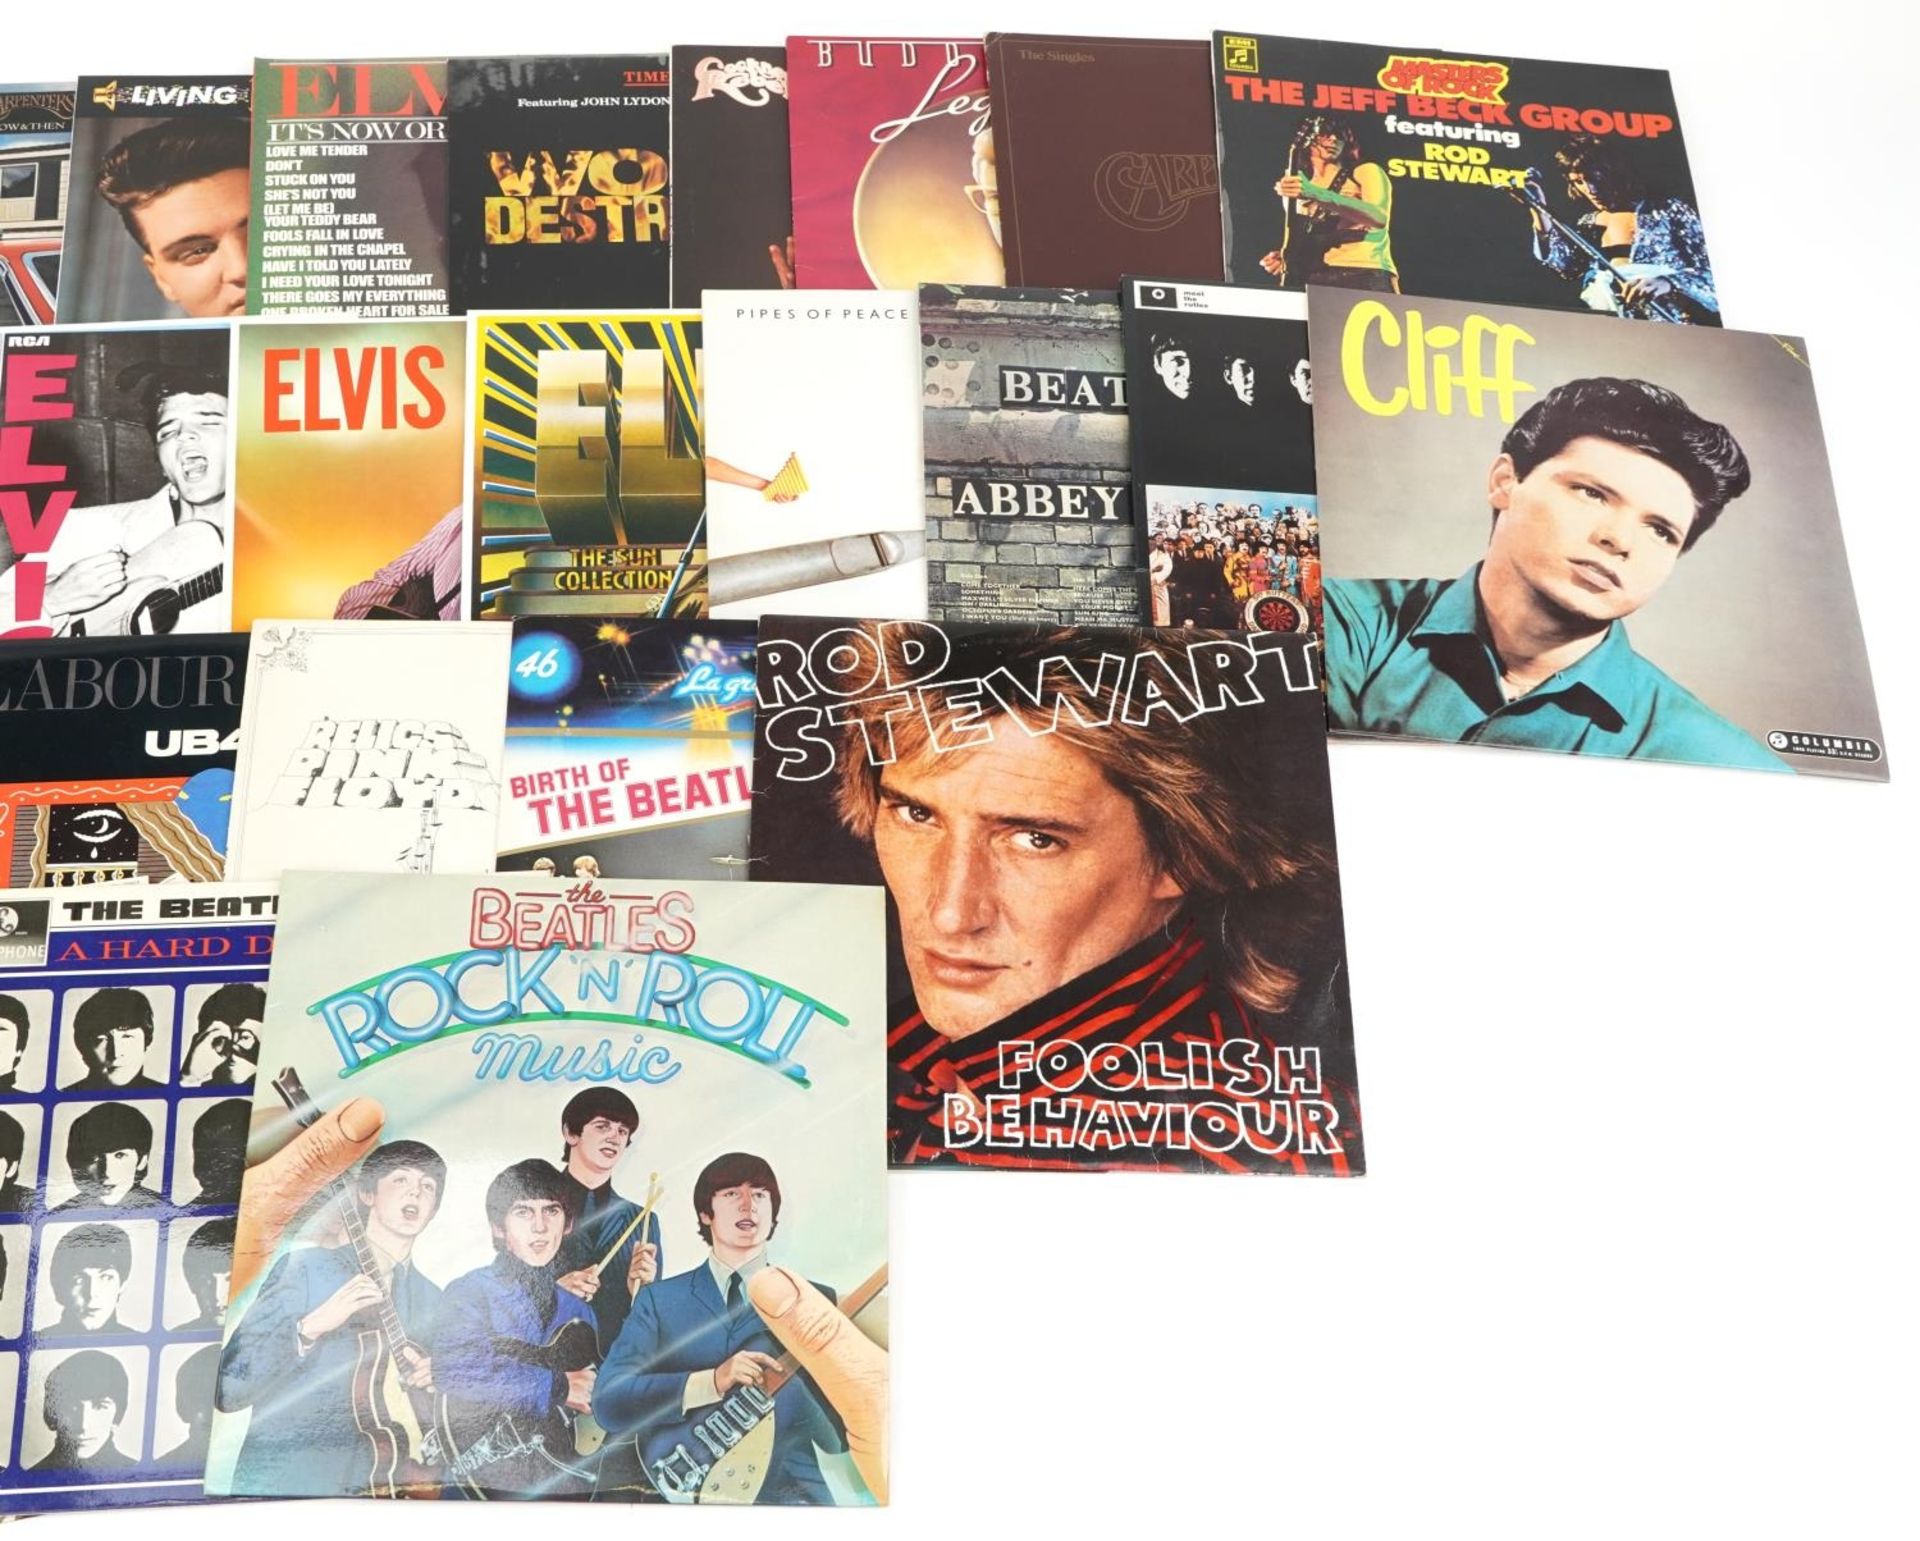 Vinyl LP records including UB40, The Beatles, Cliff Richard, Rod Stewart, Elvis Presley, The - Image 3 of 3